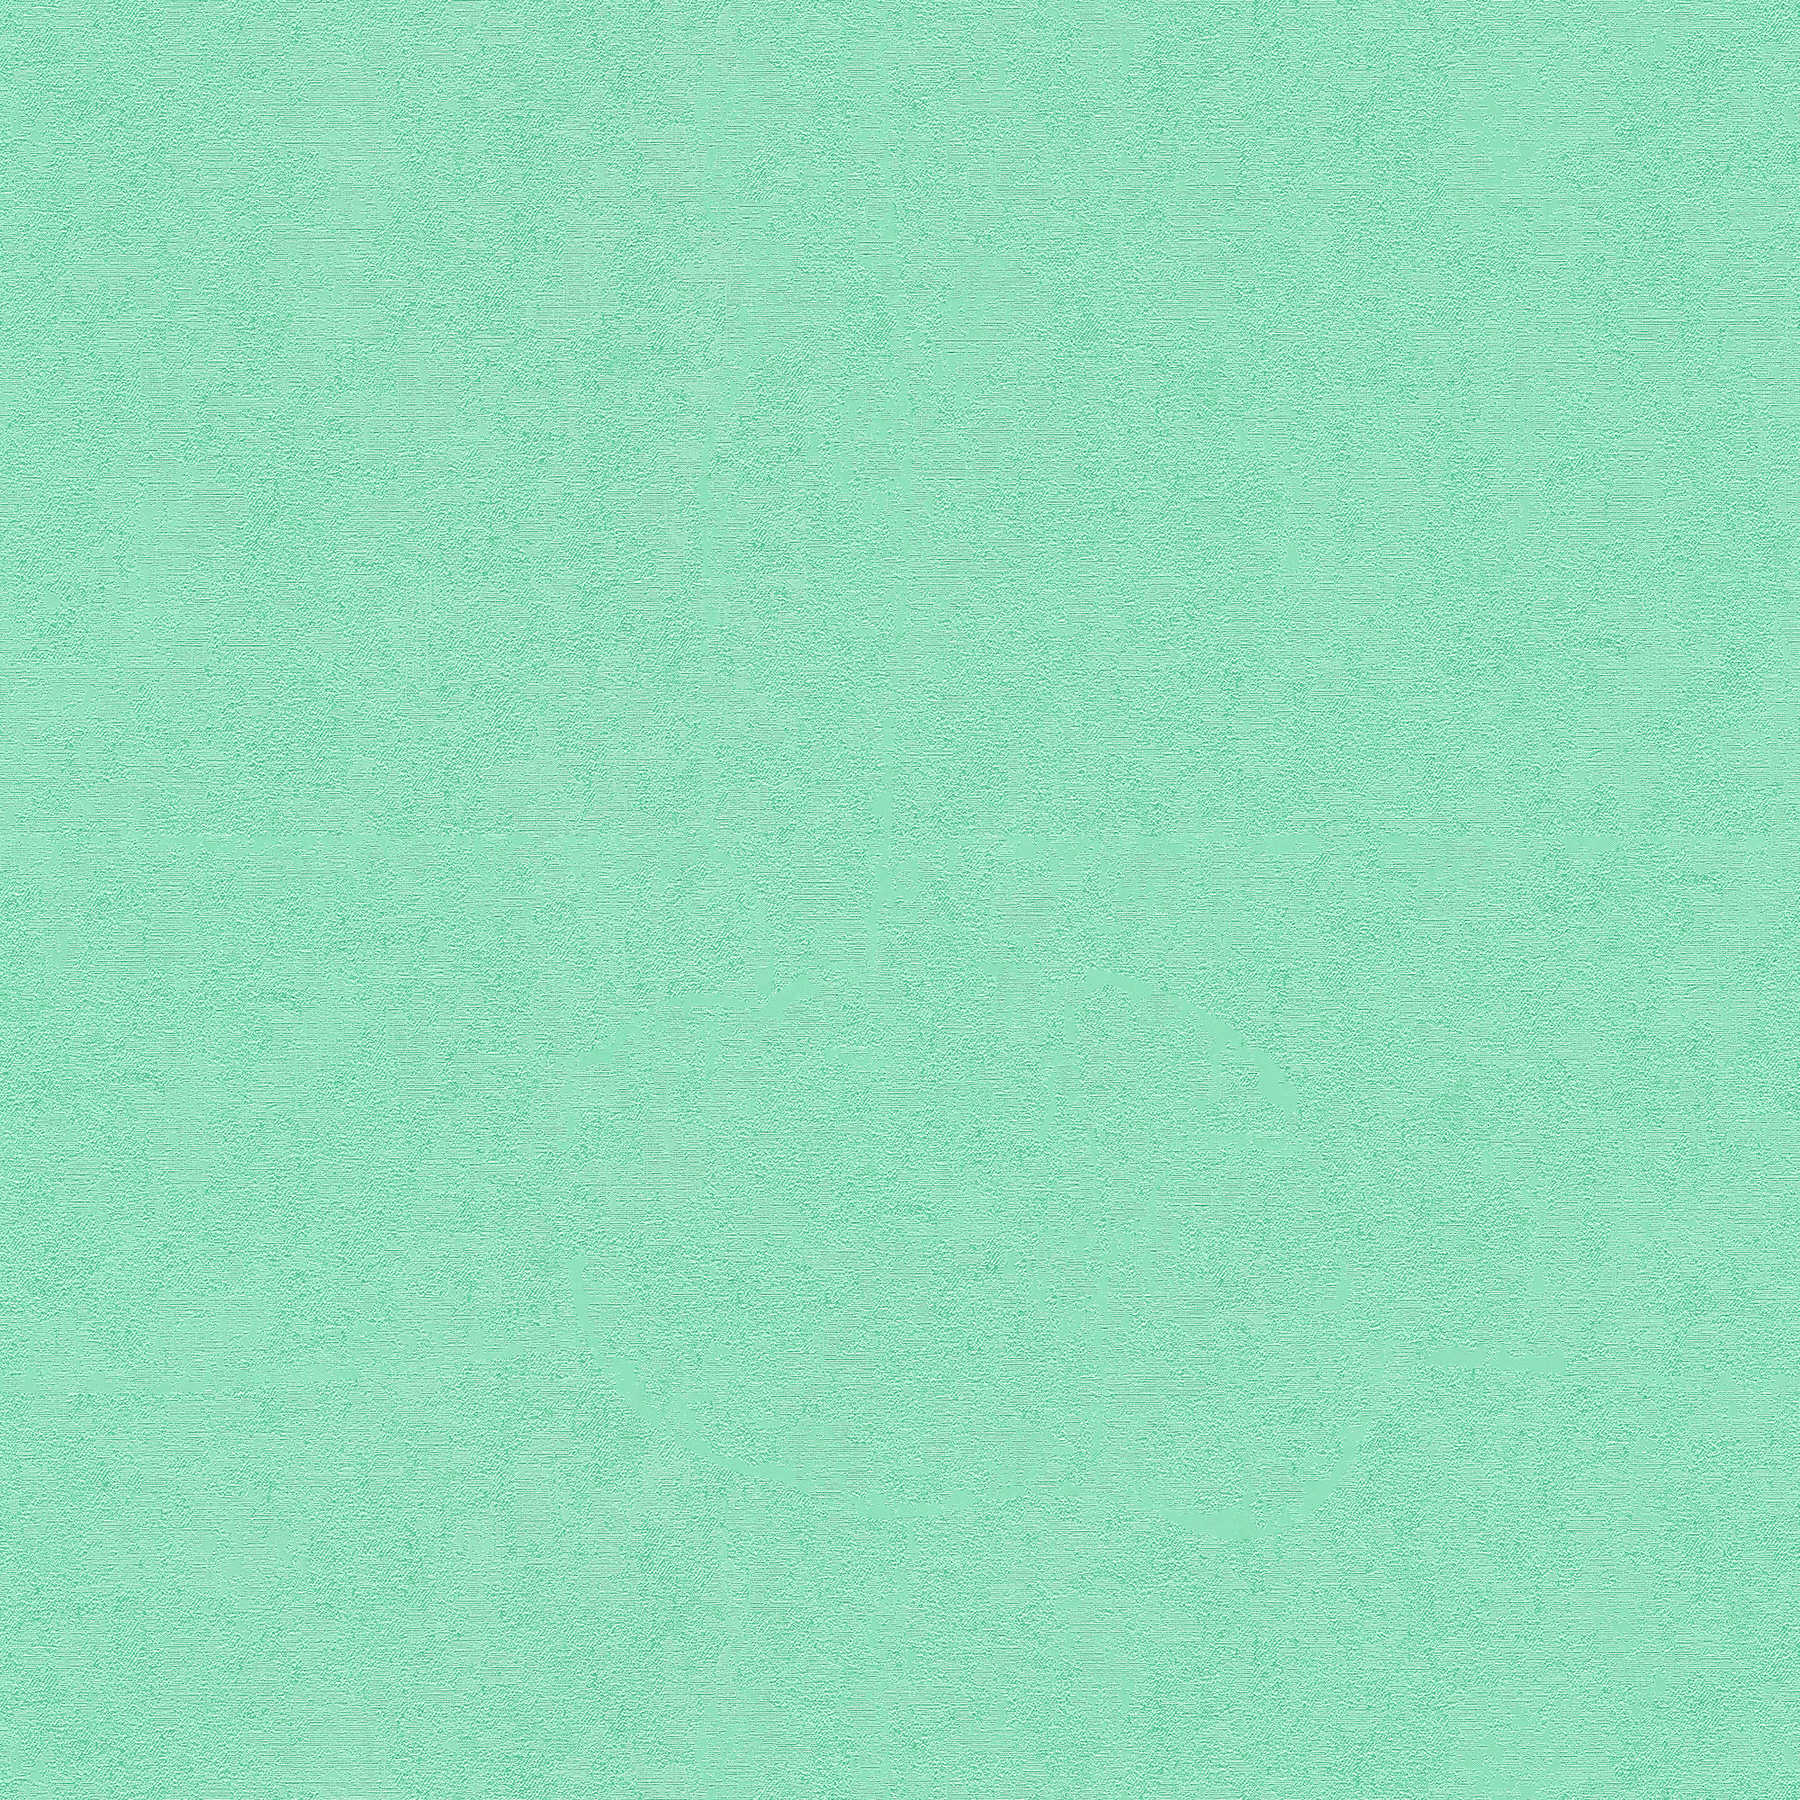 VERSACE Home plain wallpaper mint with shimmer effect - green
